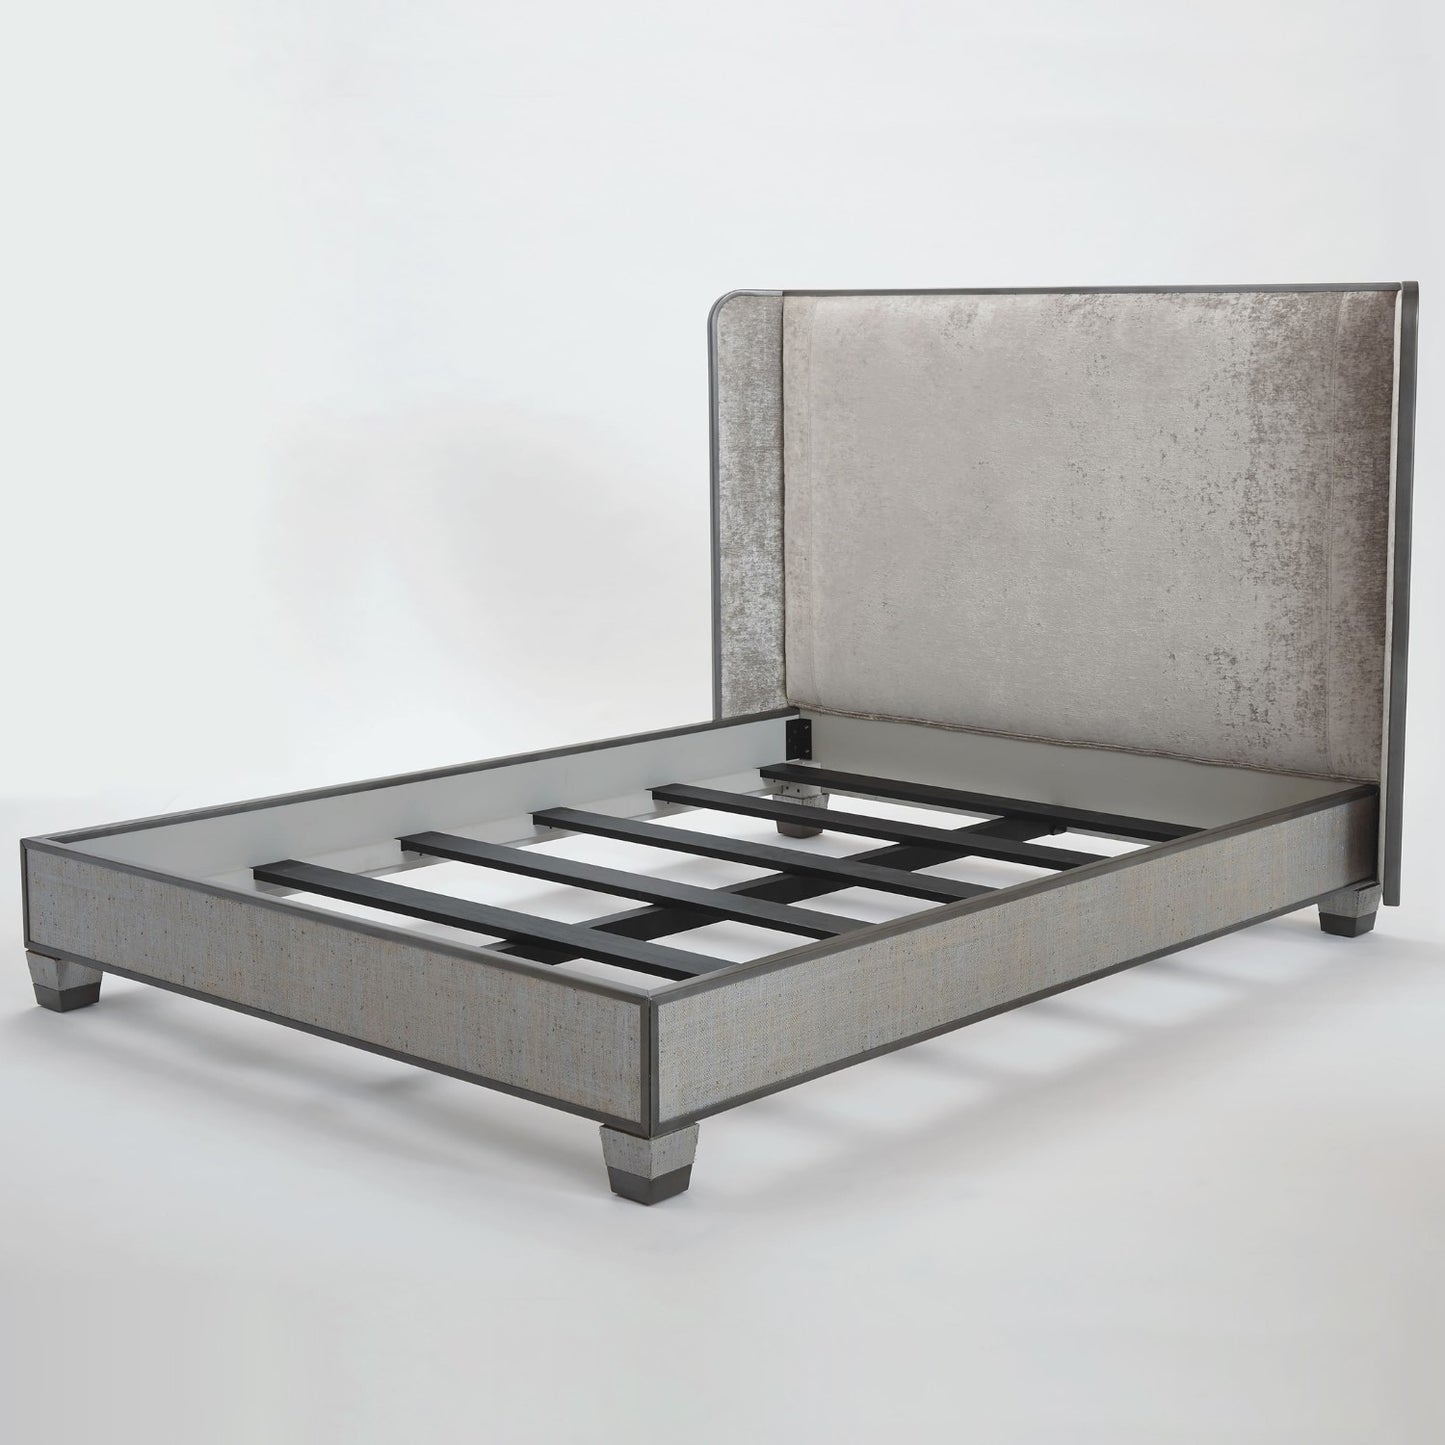 D'Oro Argento Bed- Florentine Silverwork - Queen/ King - Grats Decor Interior Design & Build Inc.